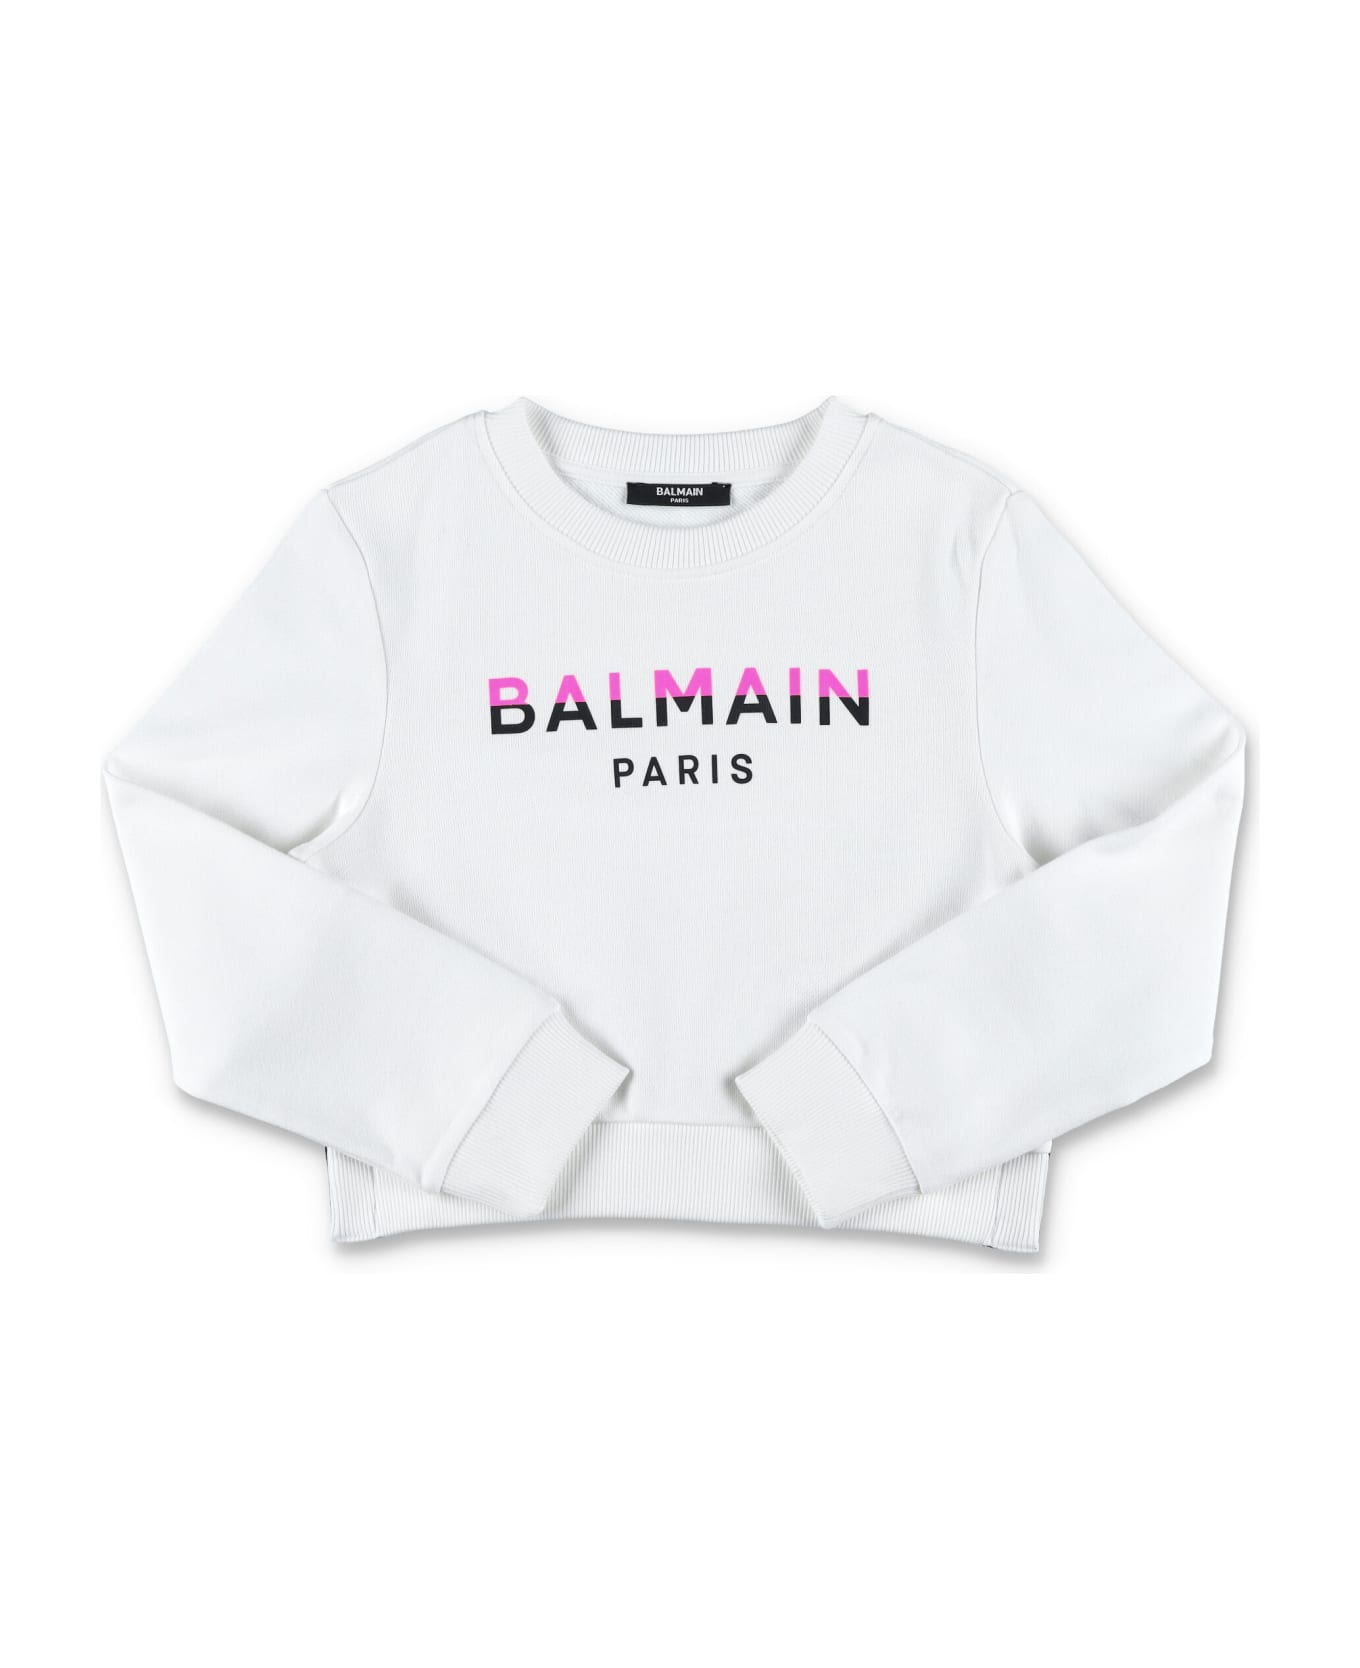 Balmain low-top Paris Two-tone Sweatshirt - WHITE/FUCHSIA